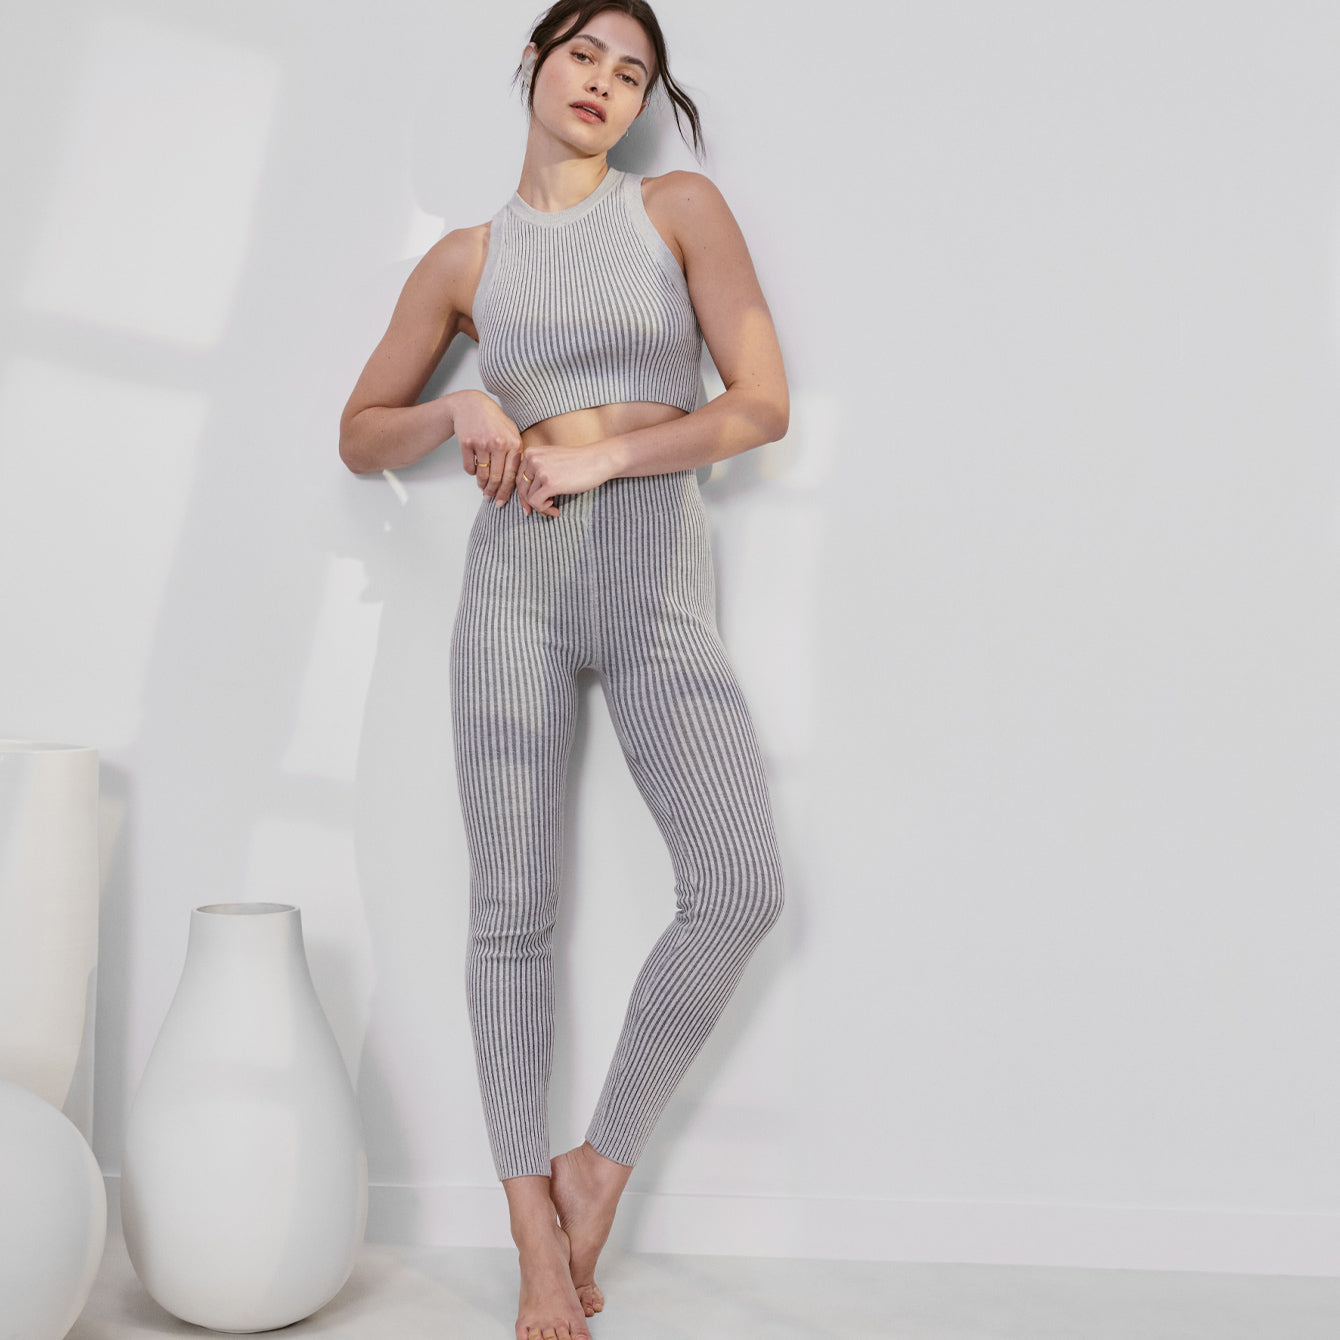 Cotton Seamless Women Leggings (Grey)